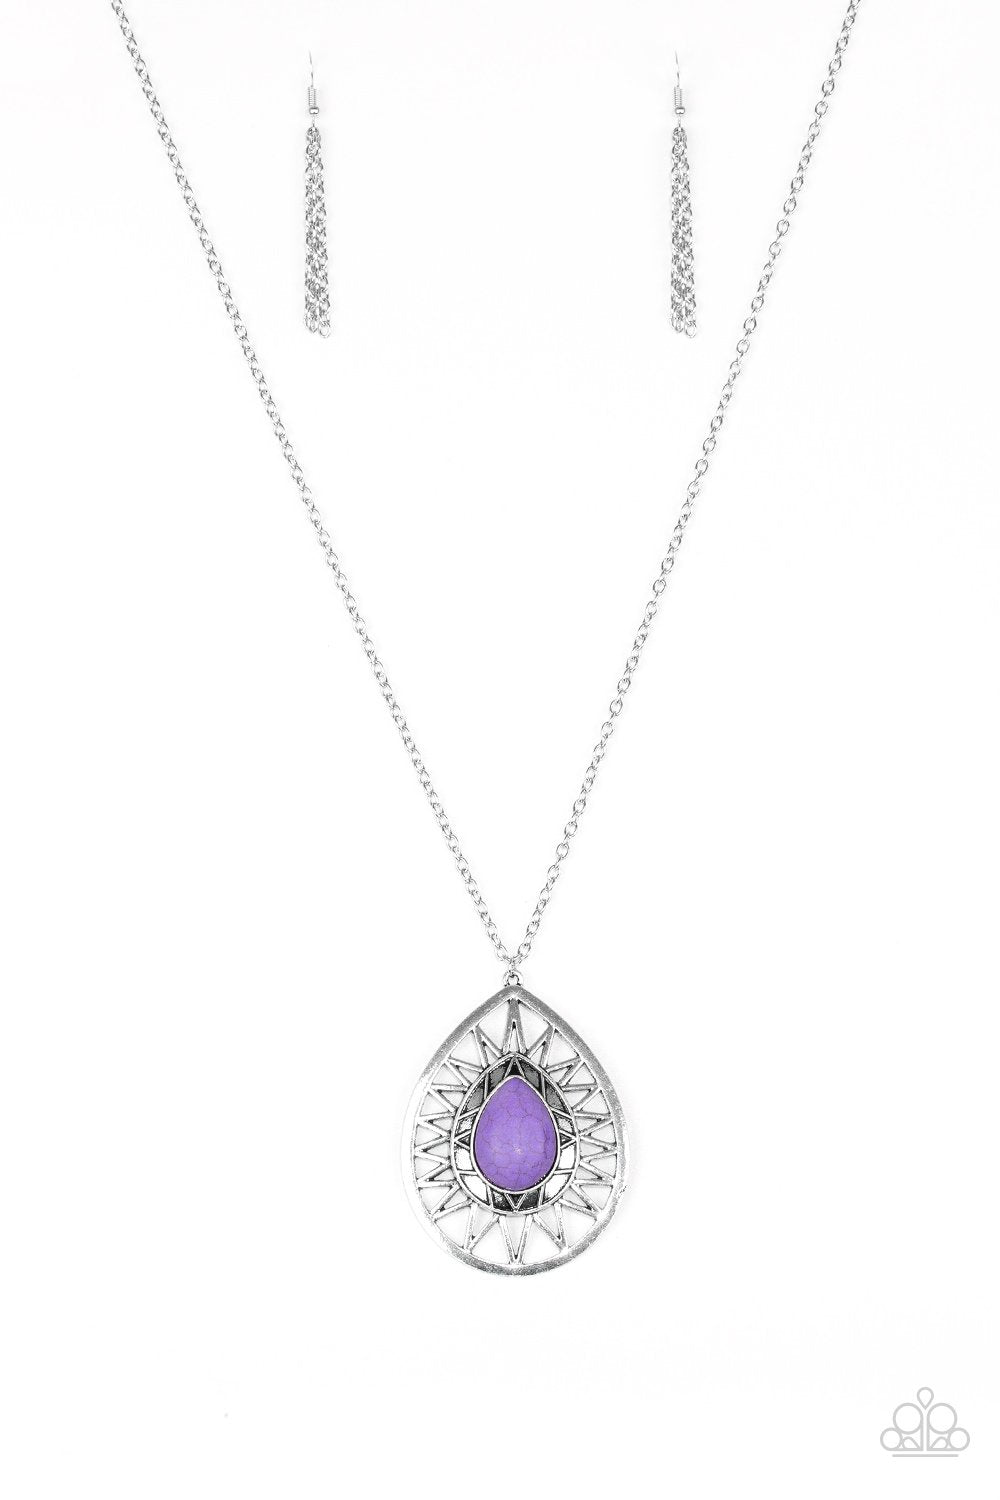 Summer Sunbeam Purple Stone Necklace - Paparazzi Accessories - lightbox -CarasShop.com - $5 Jewelry by Cara Jewels